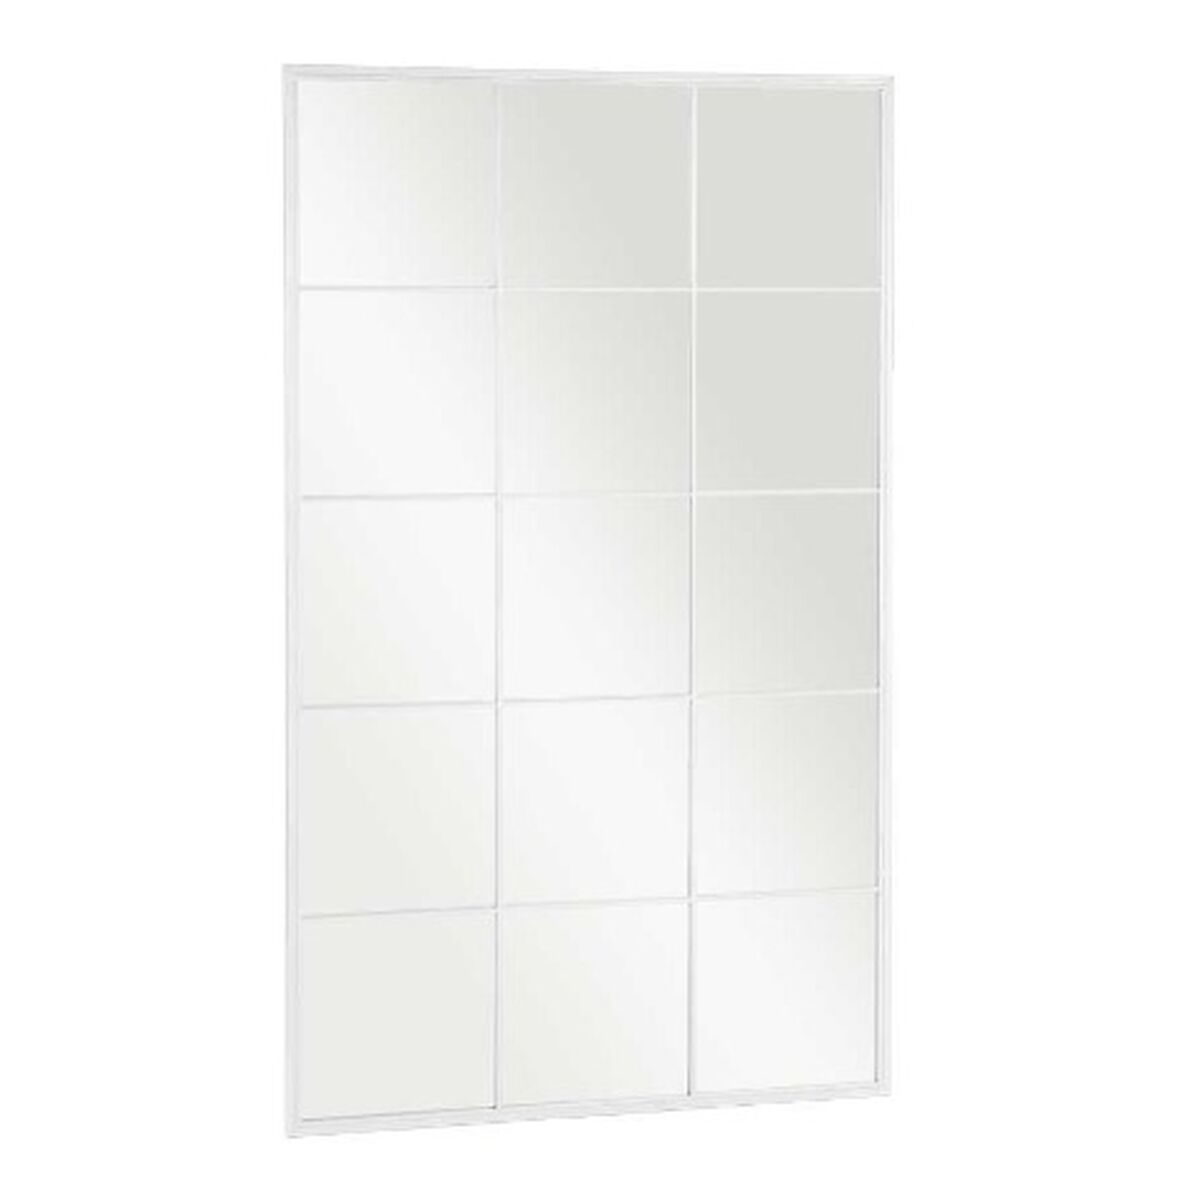 Wall mirror White Metal Crystal Window 90 x 150 x 2 cm